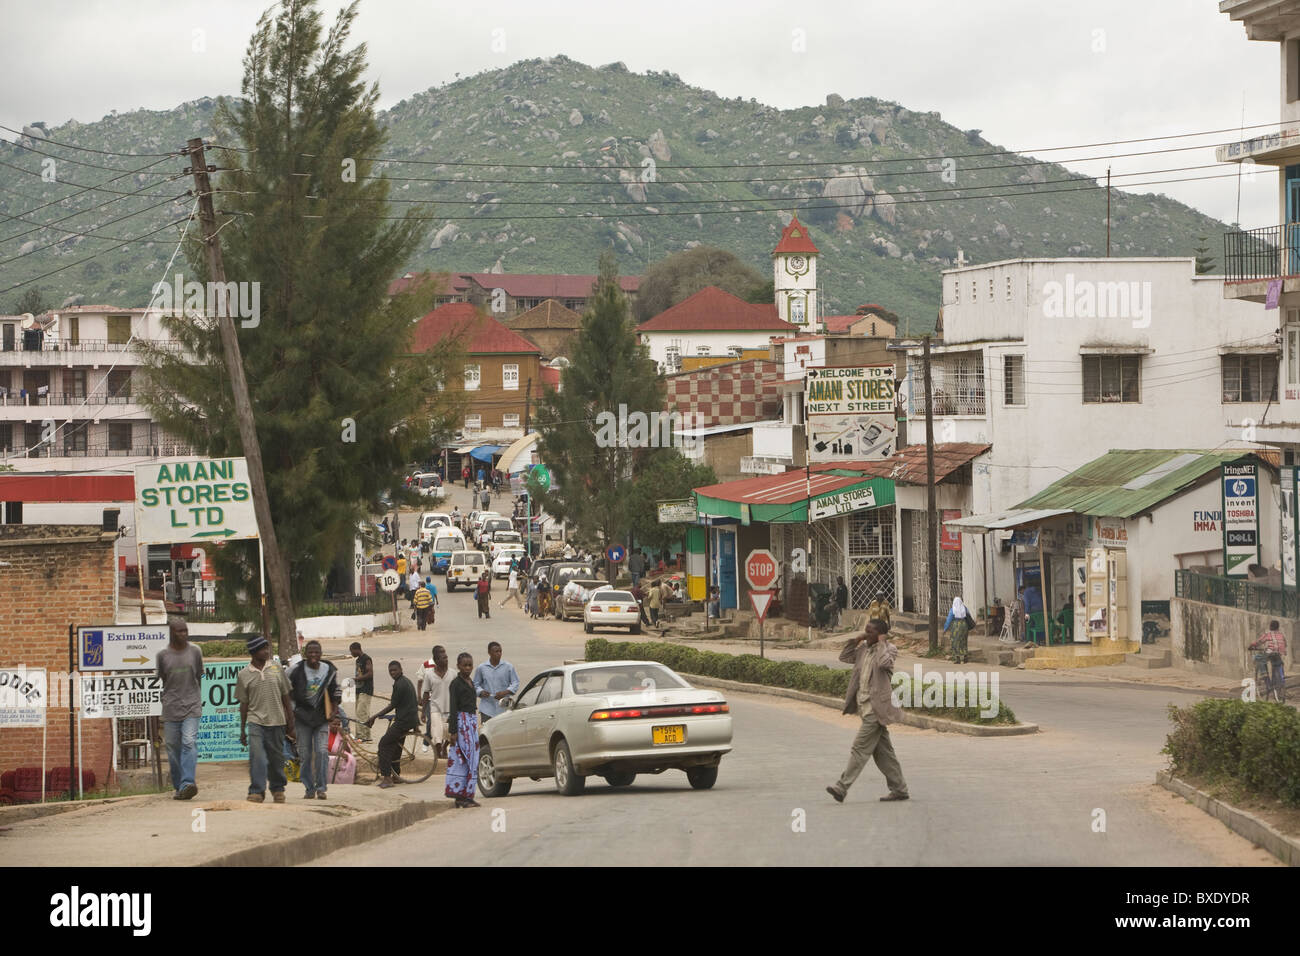 Scene from Iringa town, Tanzania, East Africa. Stock Photo